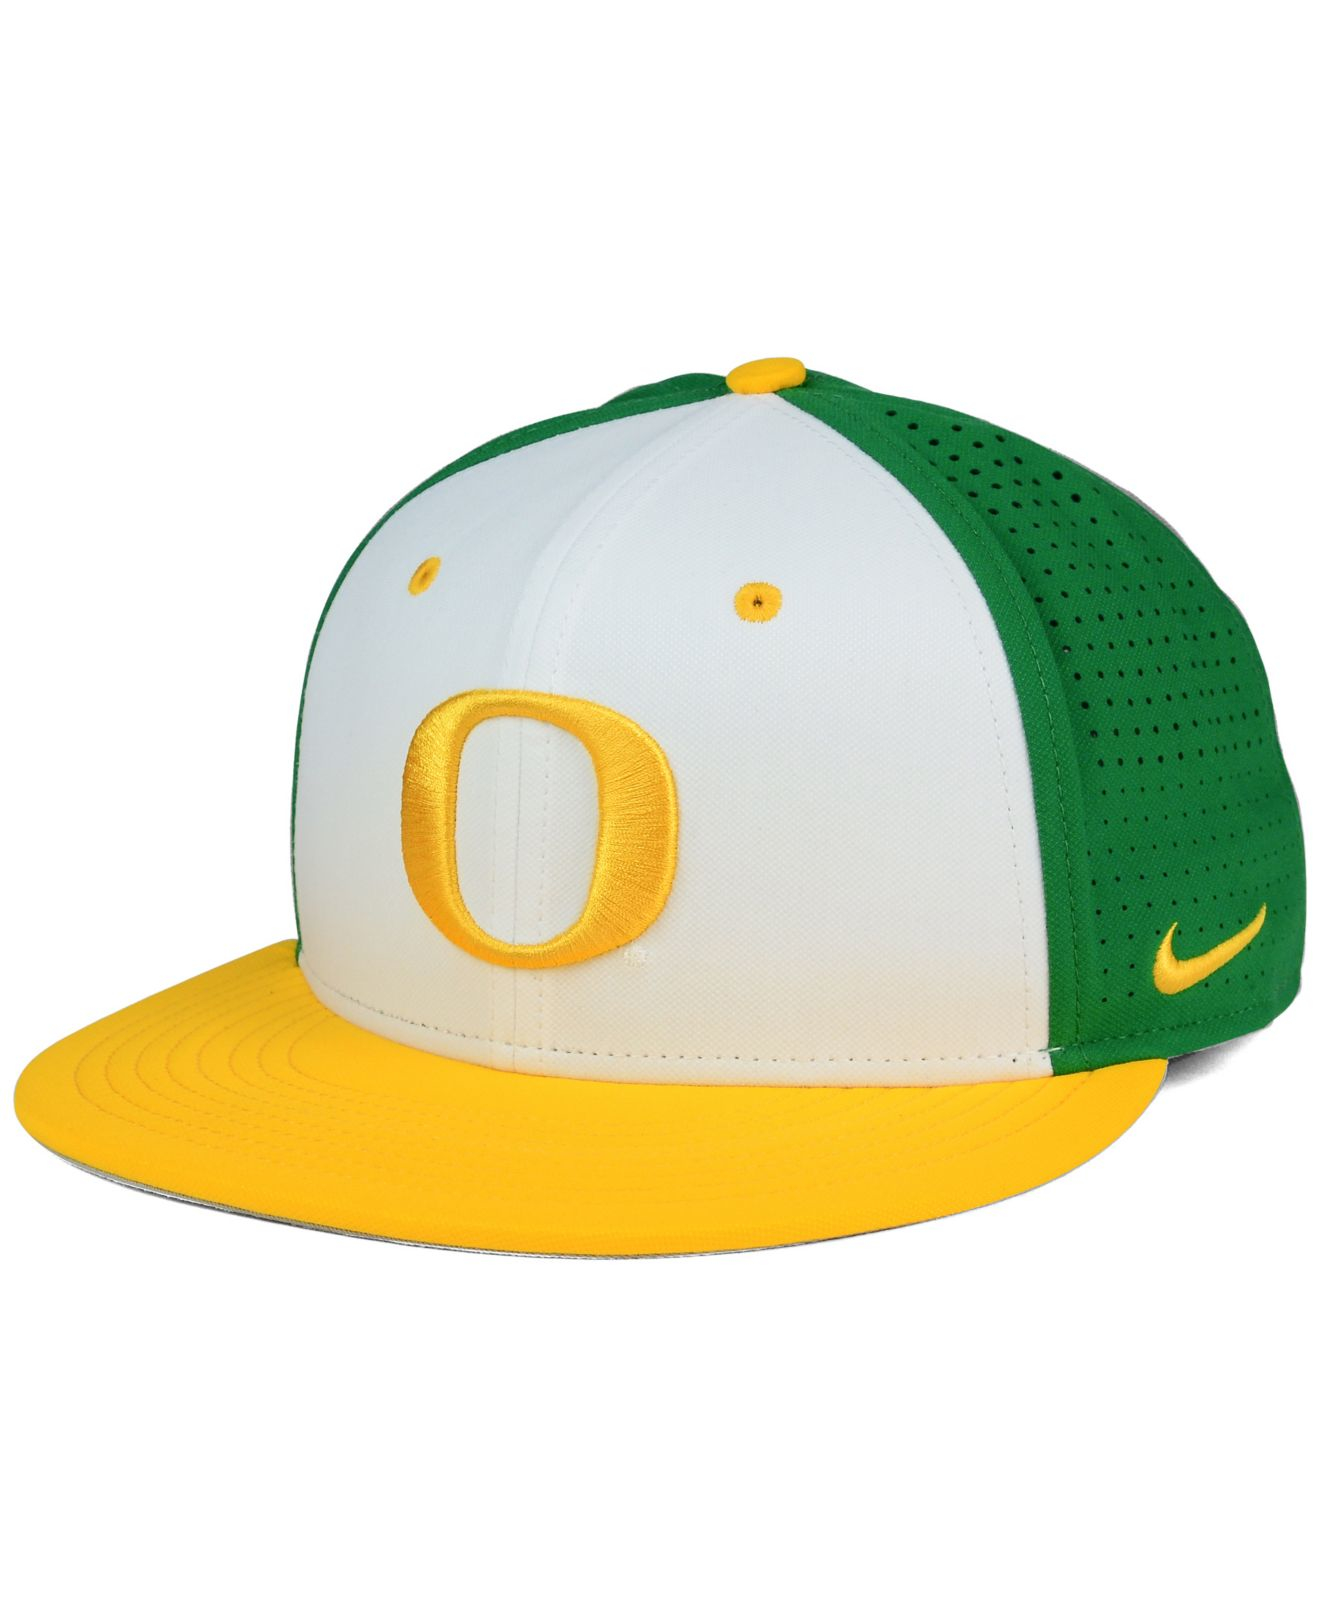 Lyst - Nike Oregon Ducks True Vapor Fitted Cap in Yellow for Men